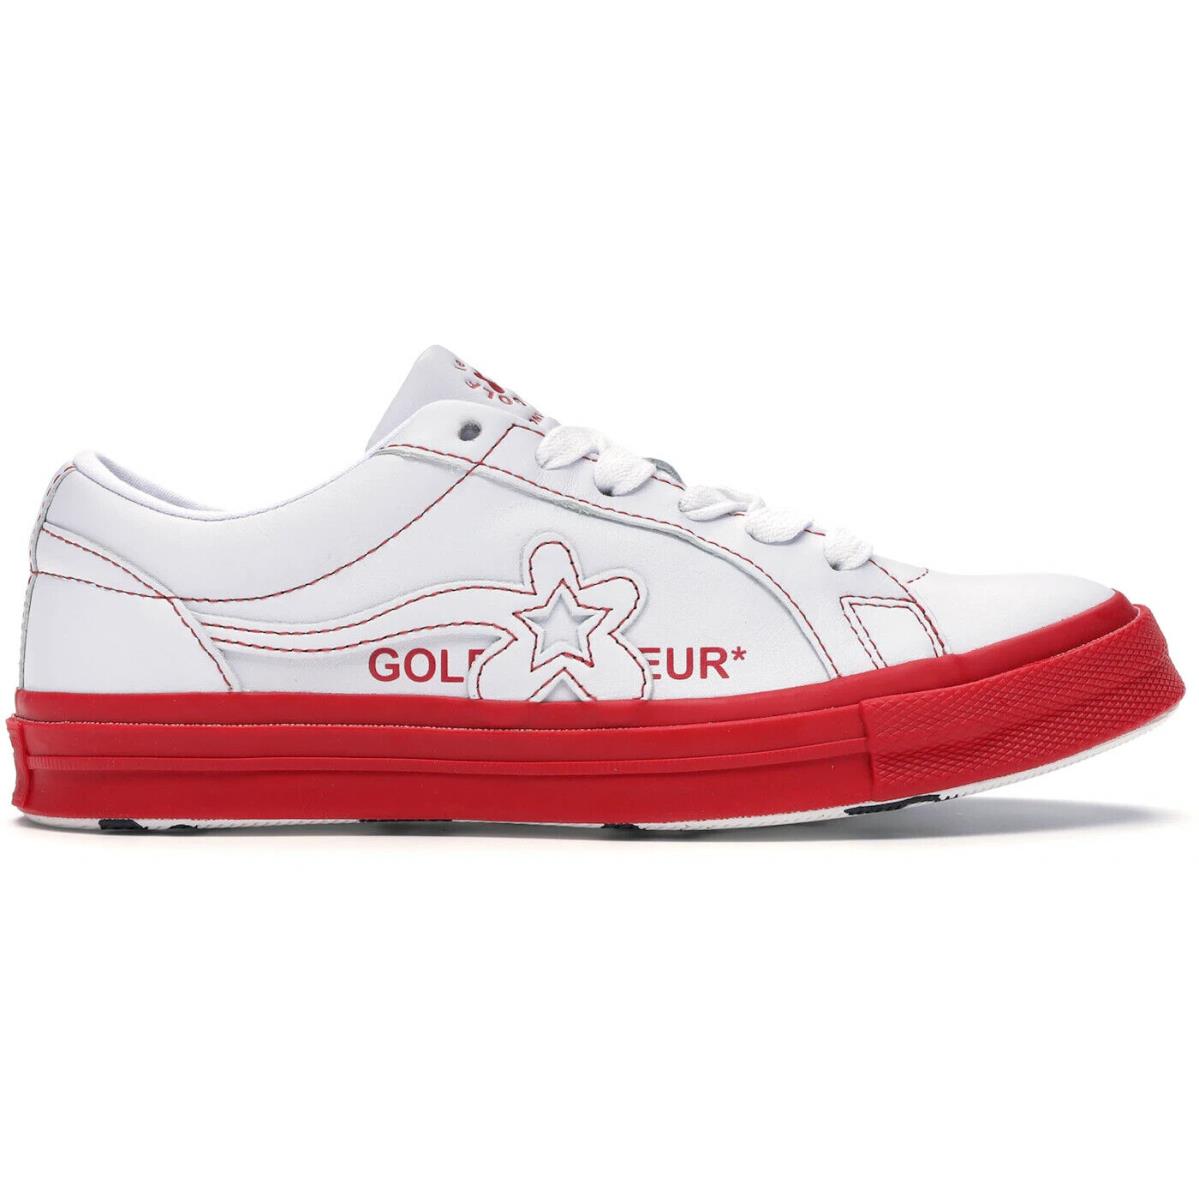 Converse One Star OX x Golf Le Fleur Men`s Sz 12 / 164026C Red White